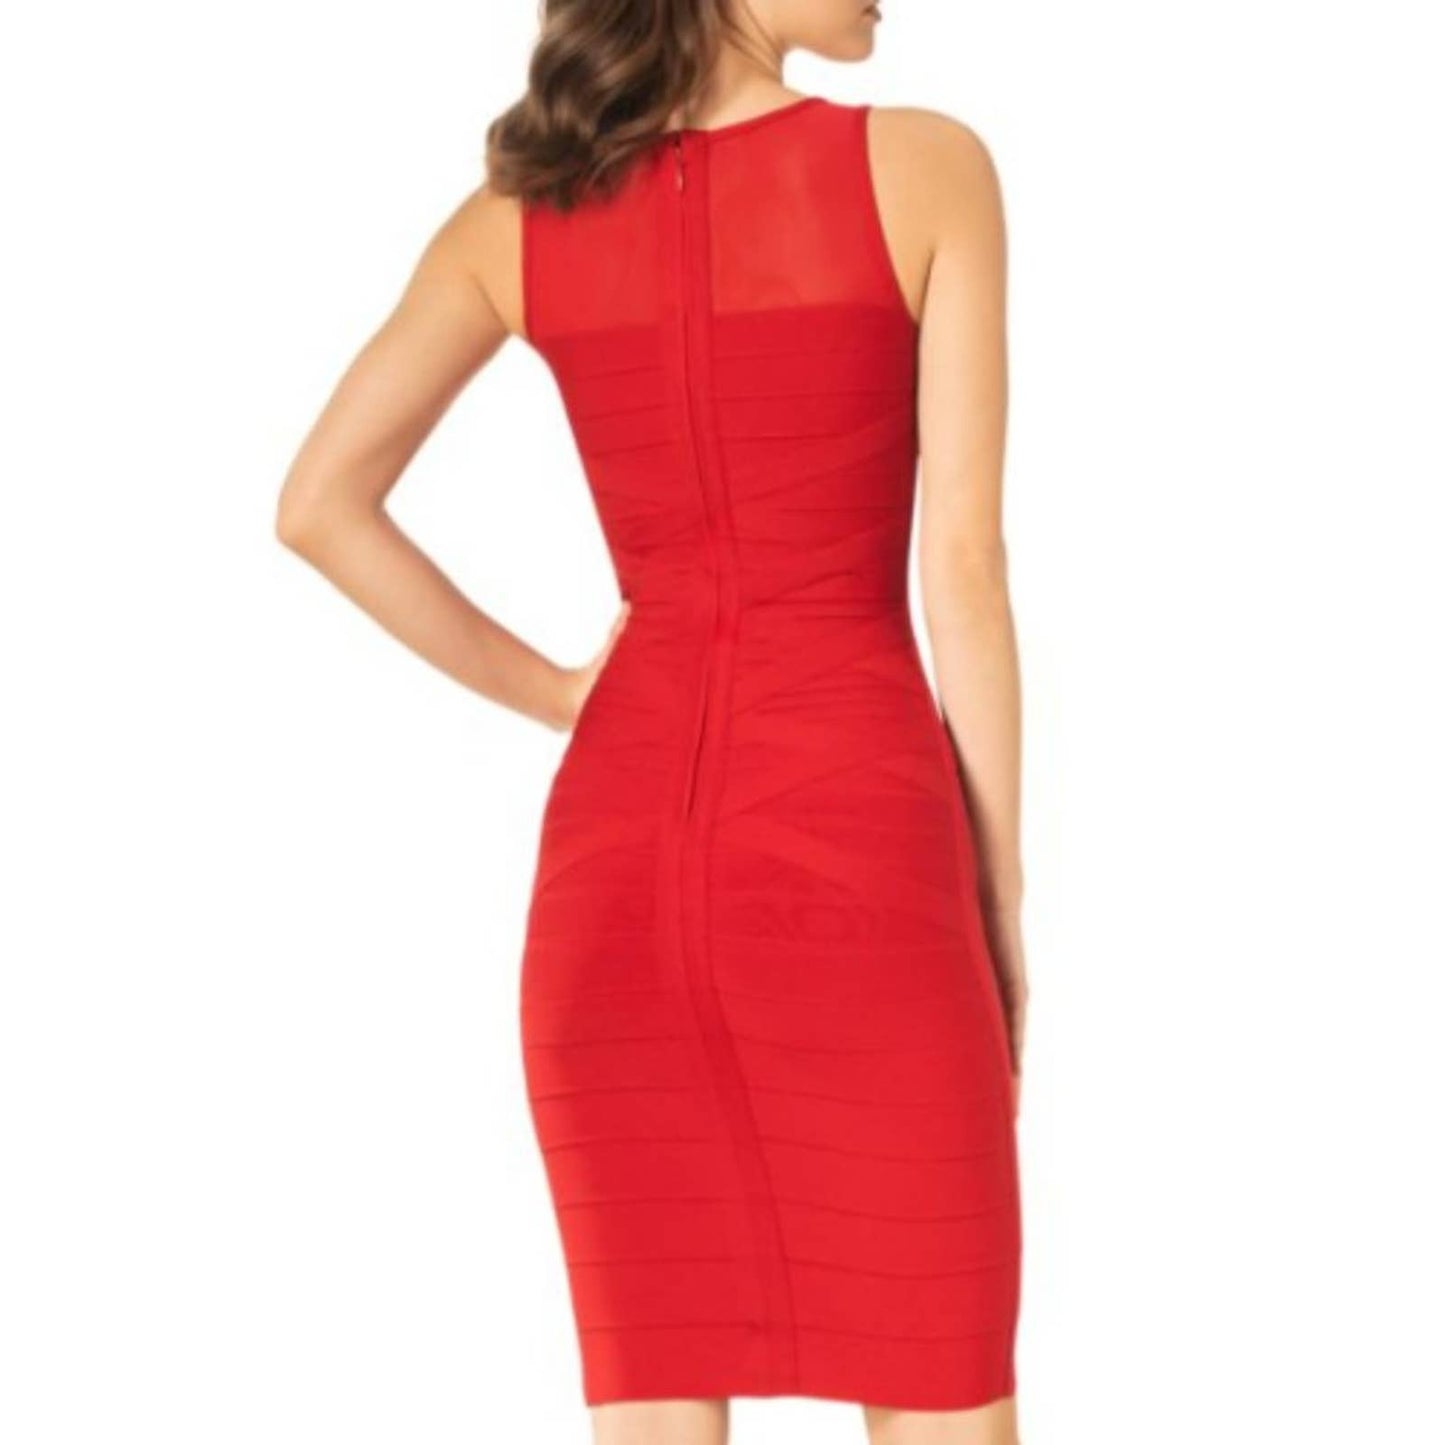 Dress The Population Ximena Red Rouge Bandage Dress NWOT Size Small